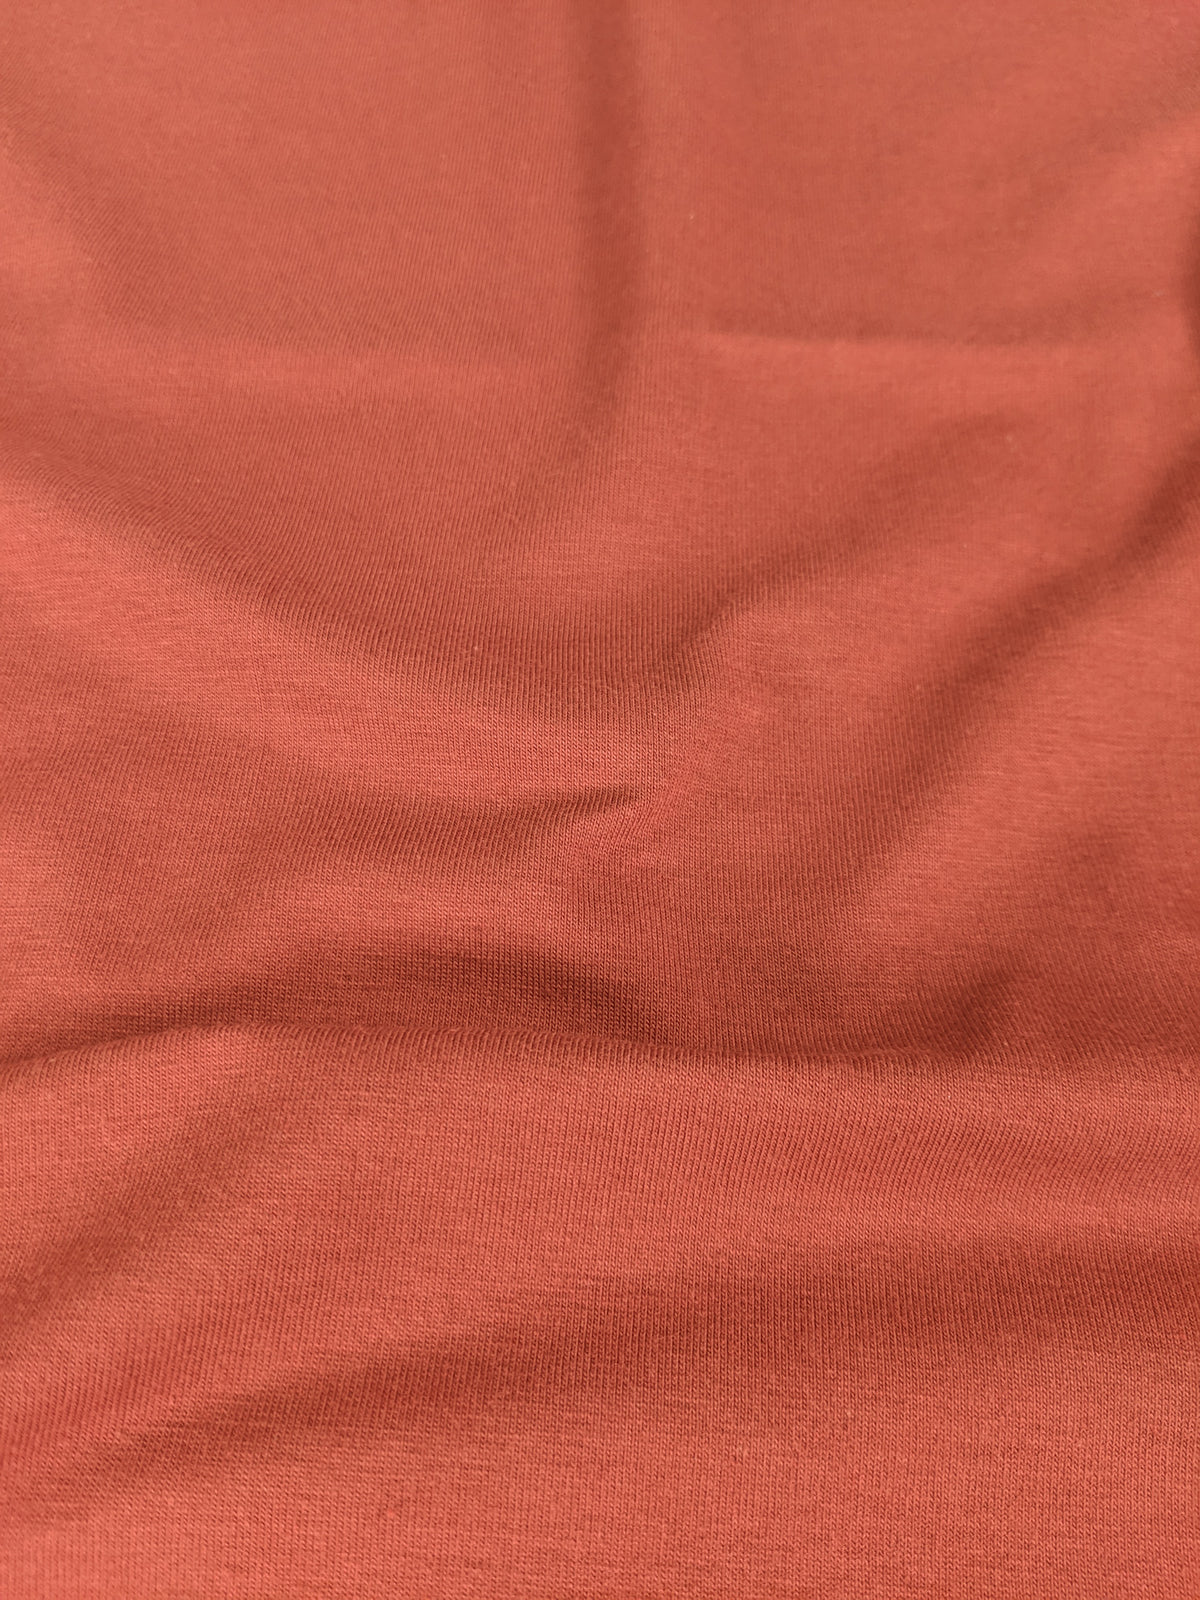 Cotton Modal Jersey Knit, Desert Orange